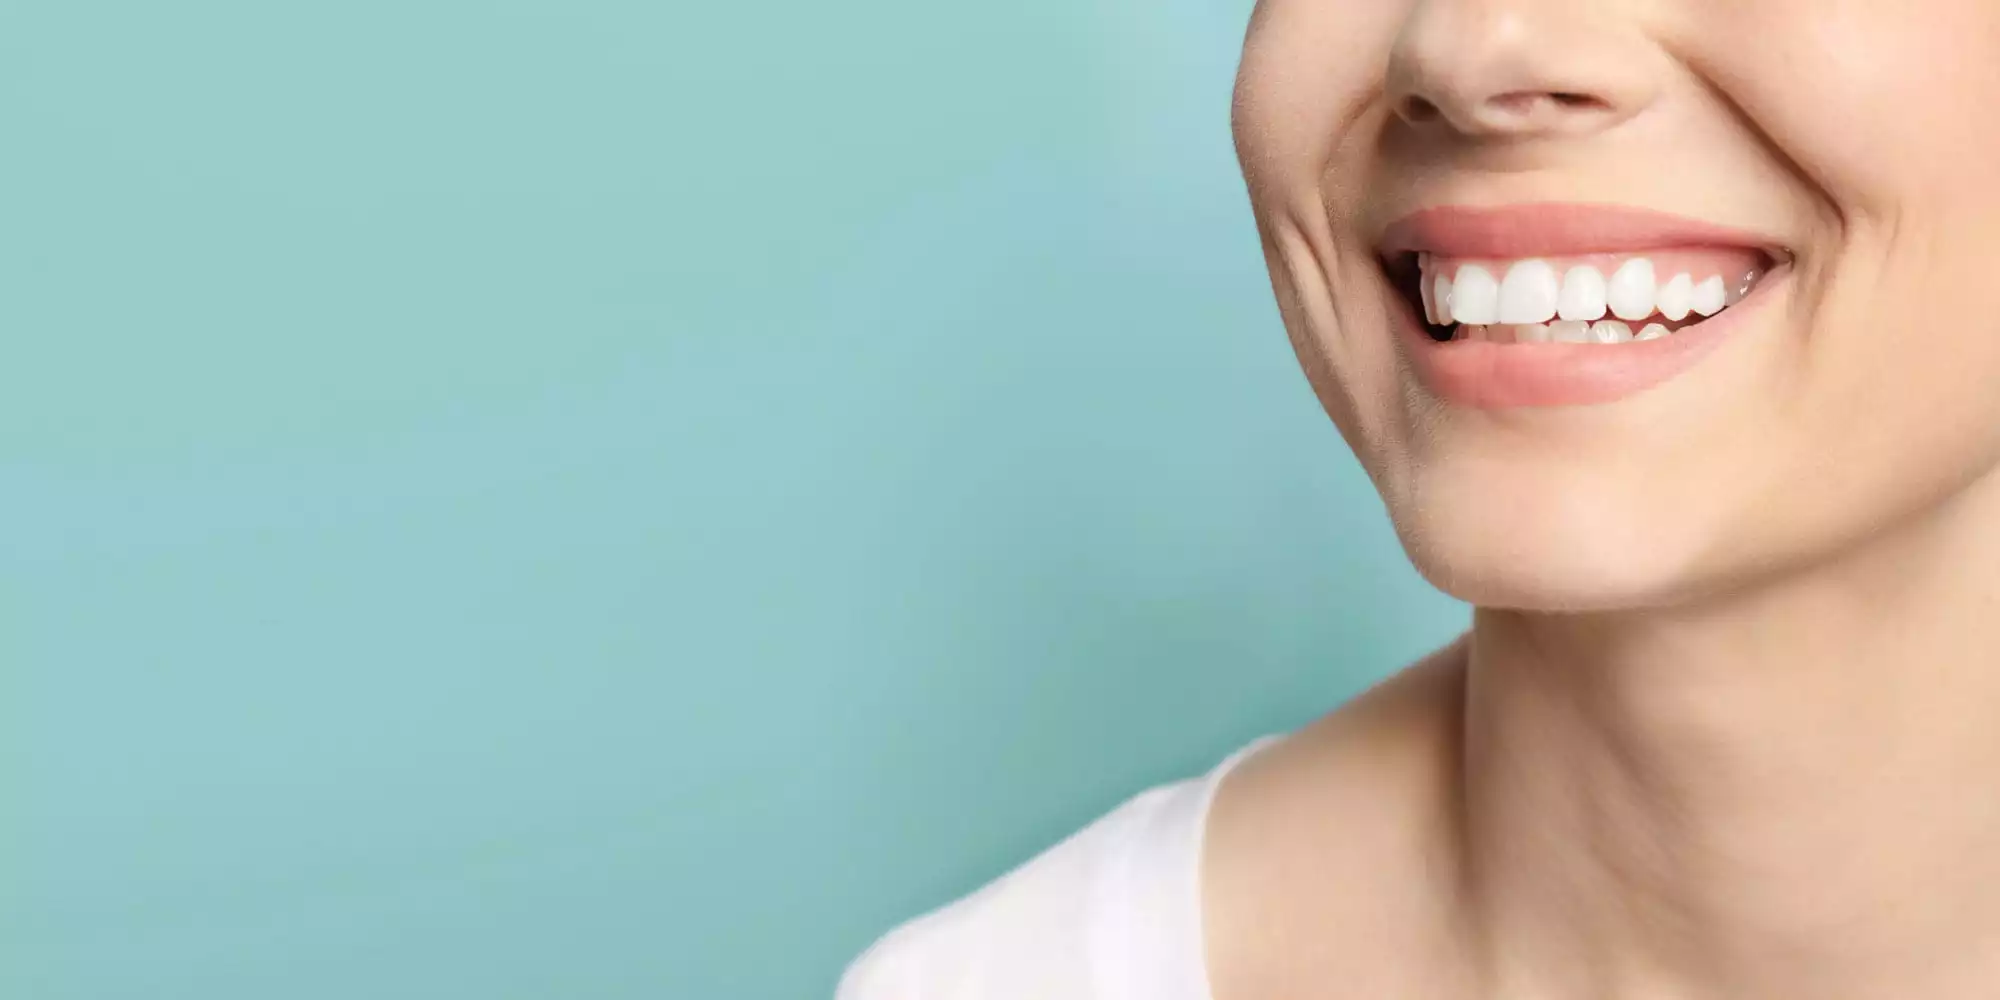 Pros of teeth whitening